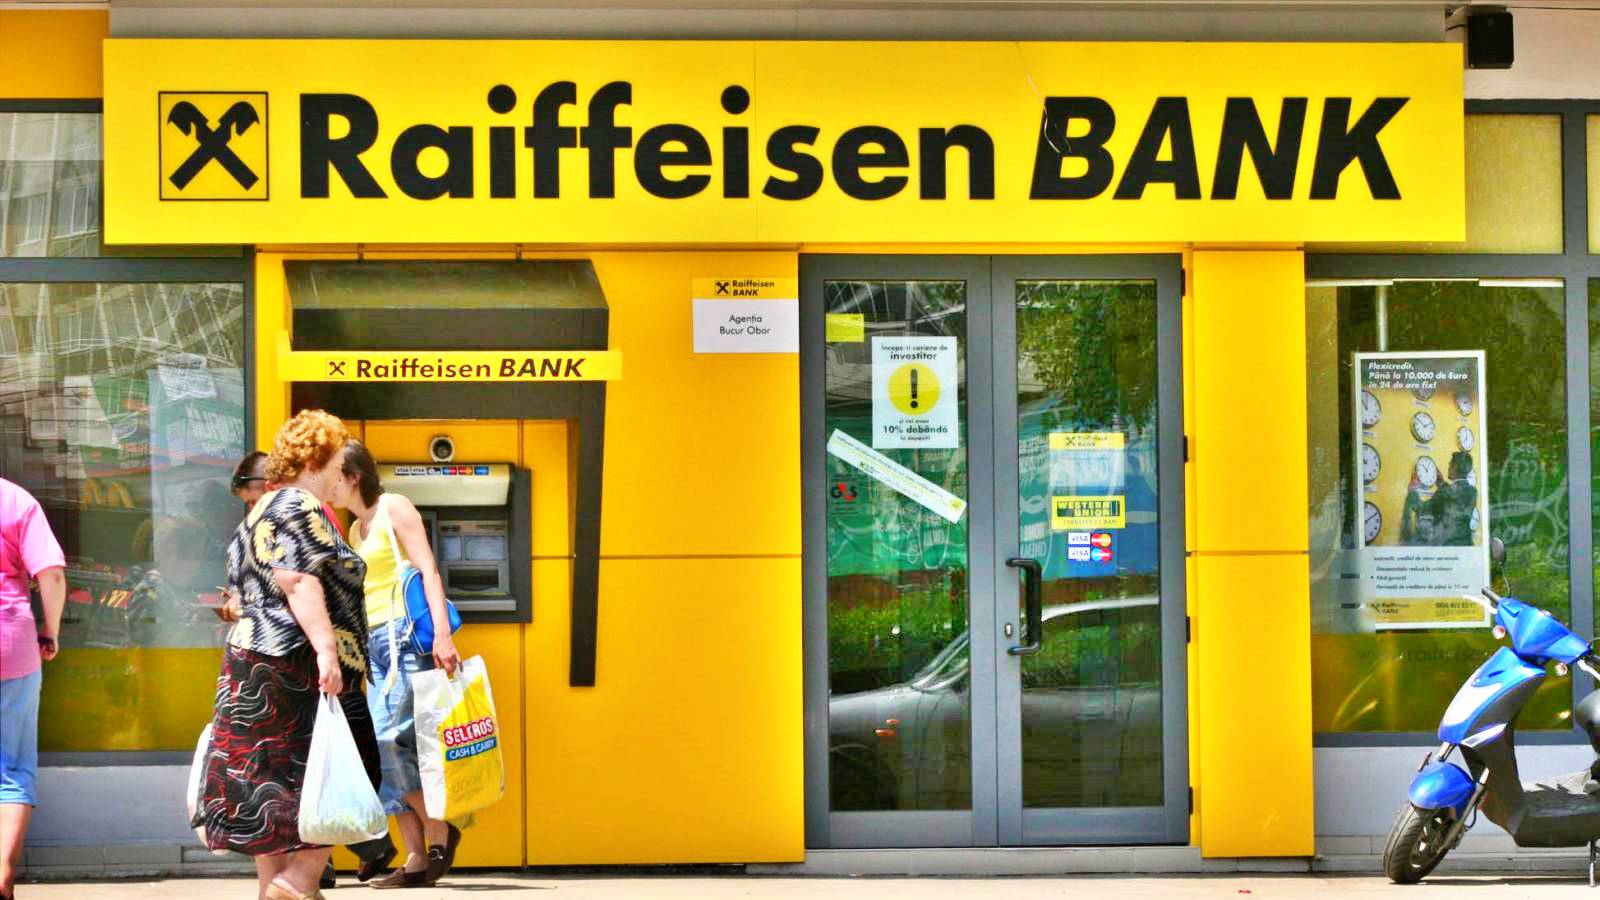 Raiffeisen Bank LAST MINUTE-meddelelse er rettet mod alle rumænske kunder